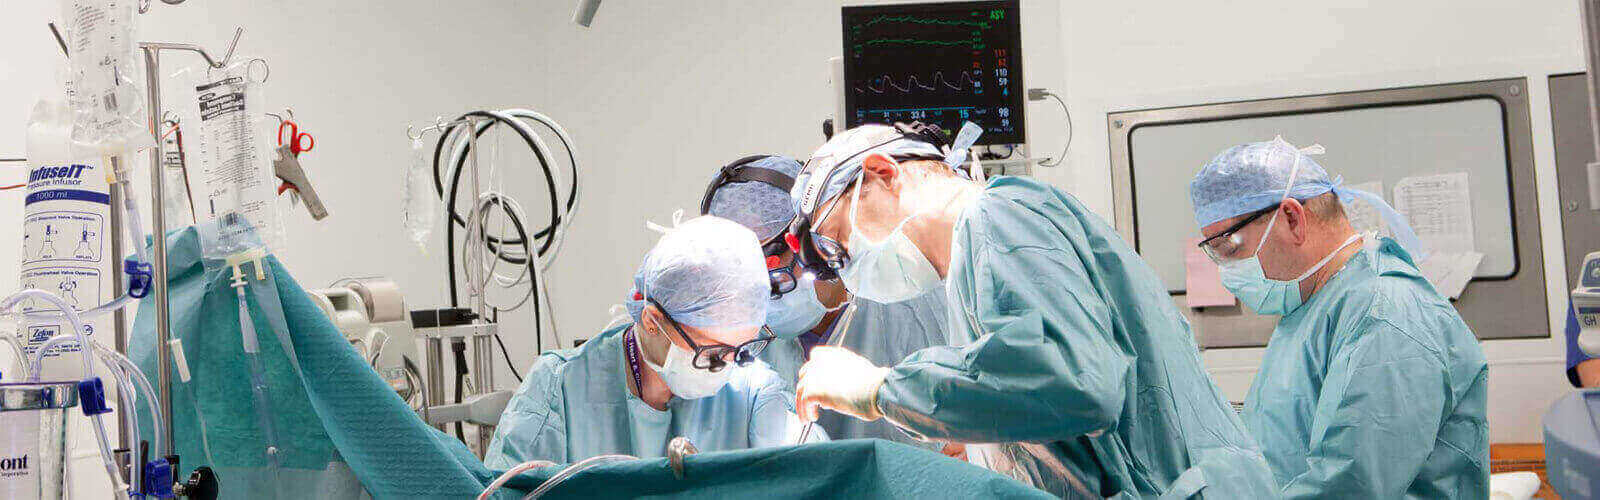 Heart Surgery Or Cardiac Surgery in Us